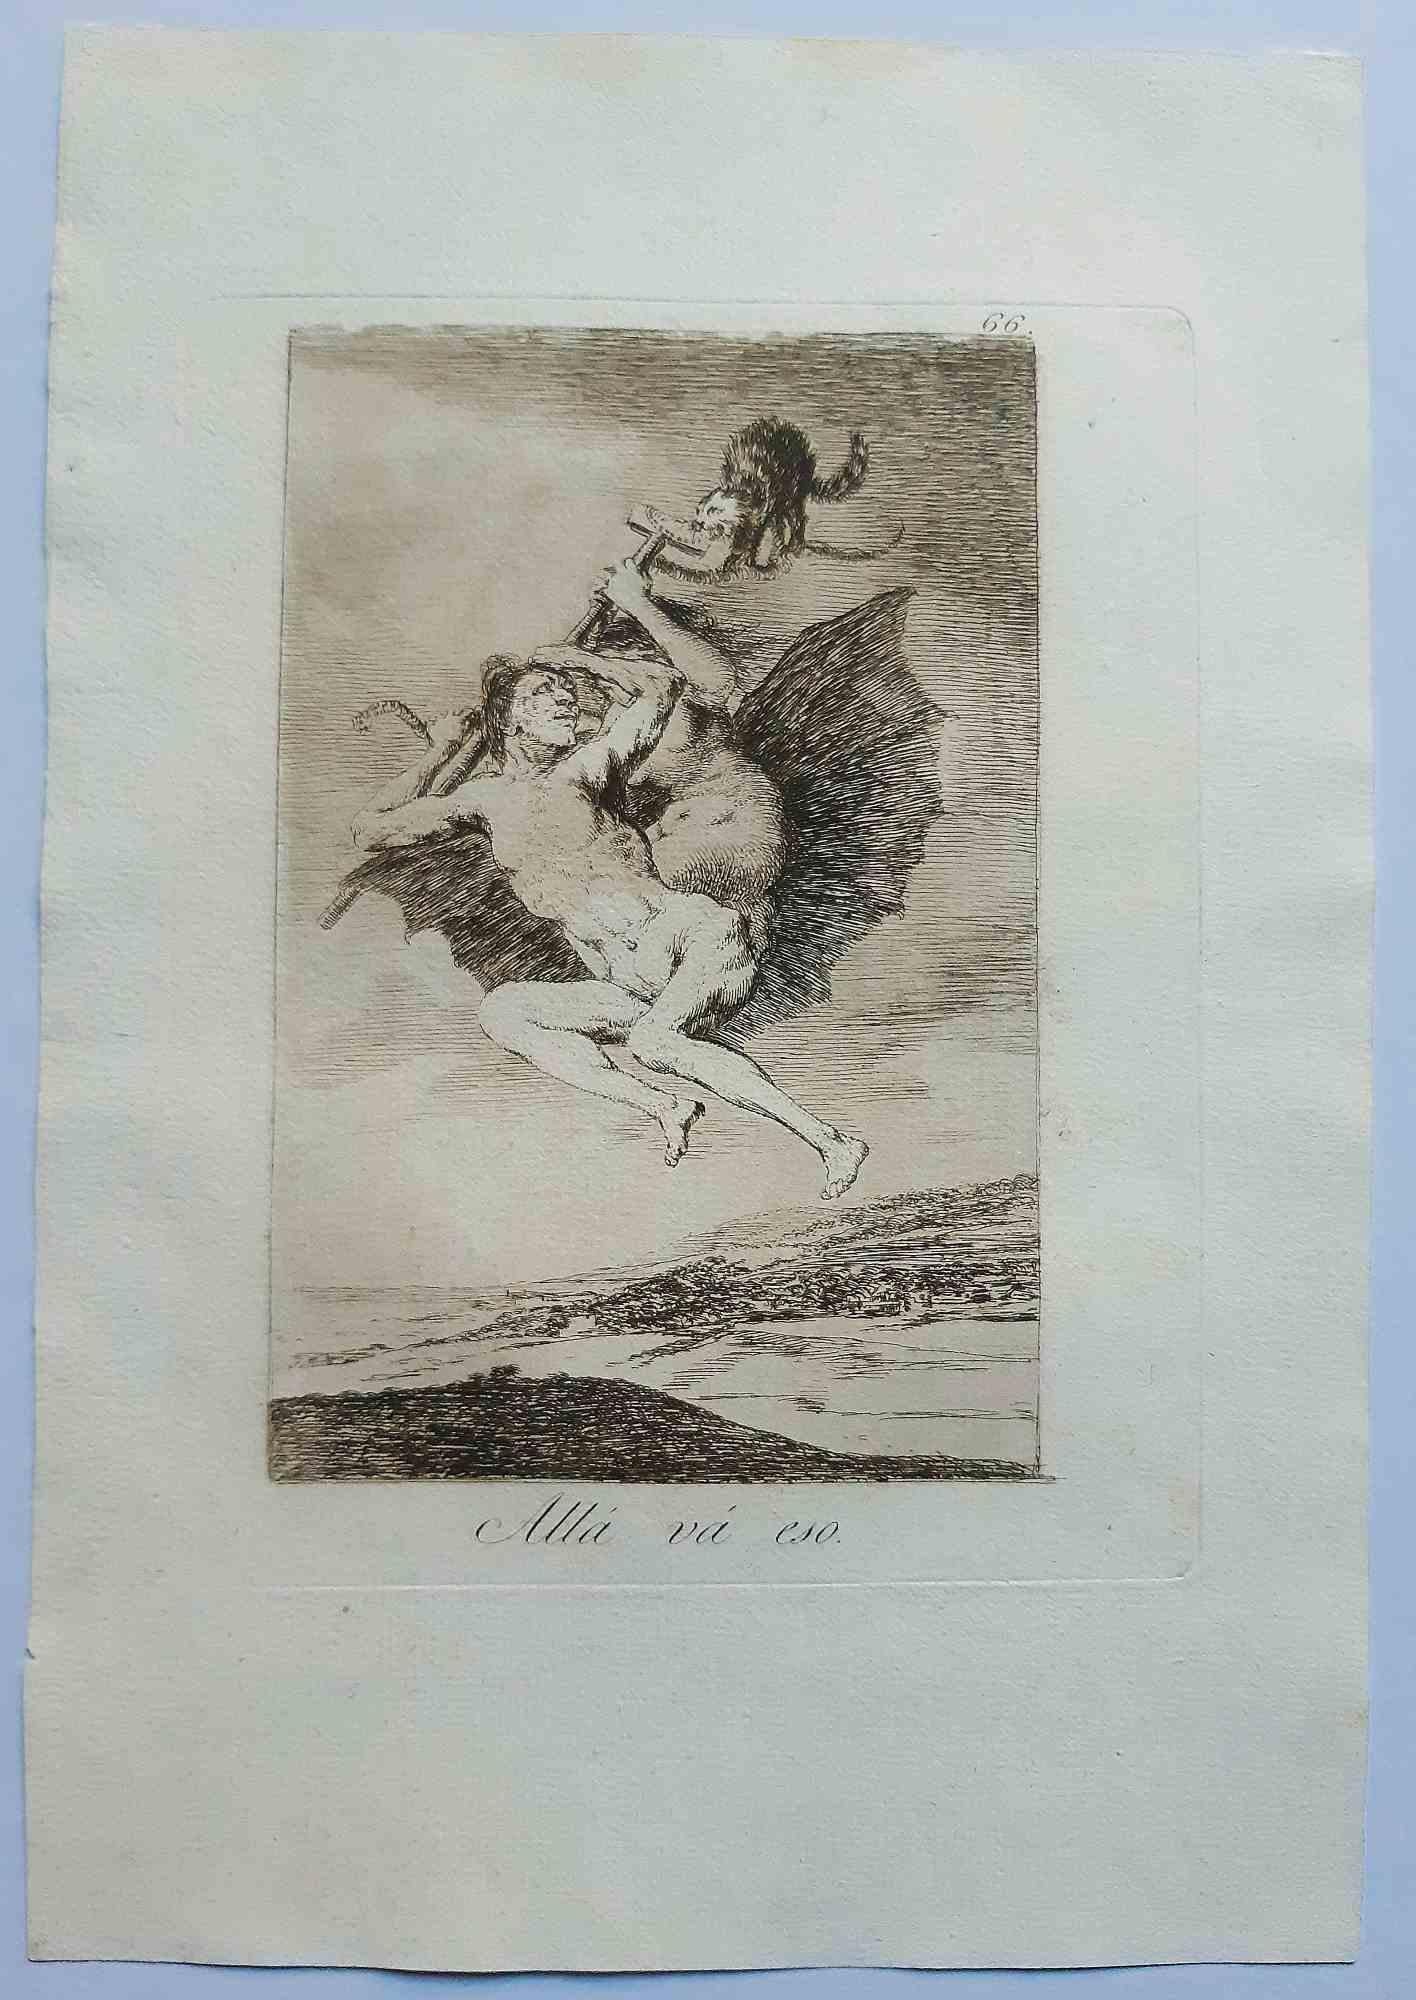 Allà Và Eso de Los Caprichos - Gravure de Francisco Goya - 1799 en vente 1